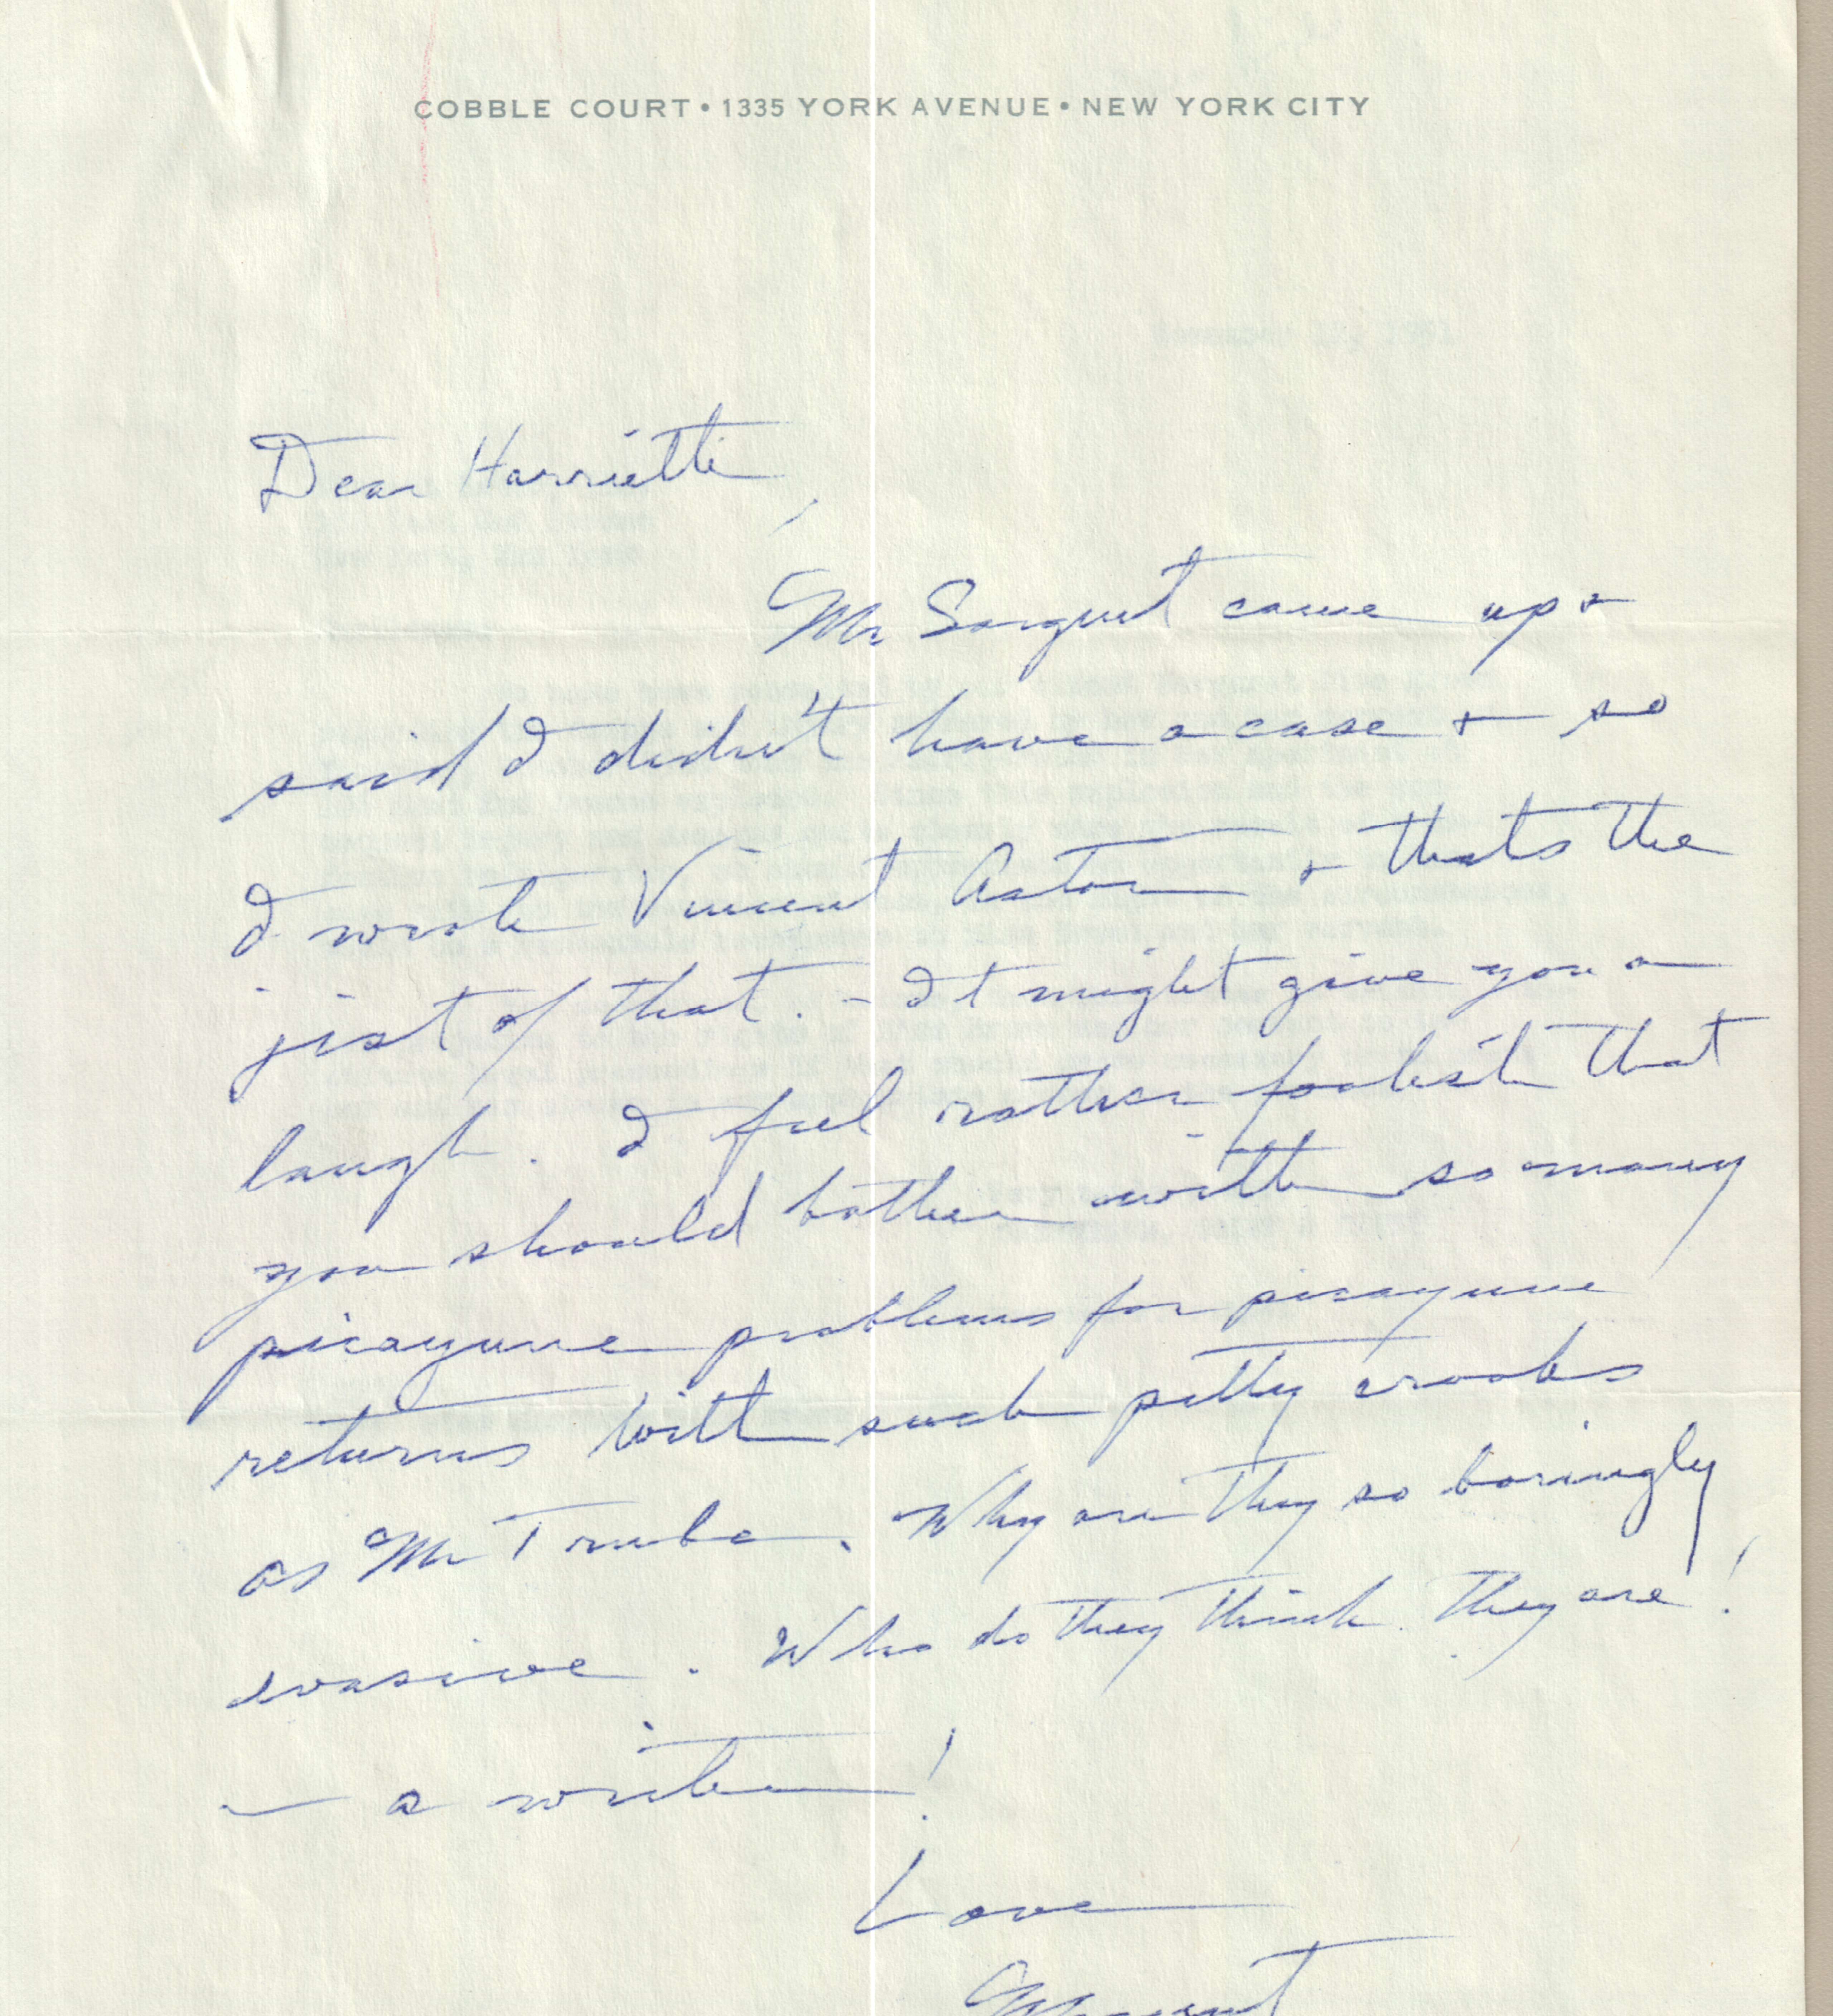 Margaret Wise Brown Letter